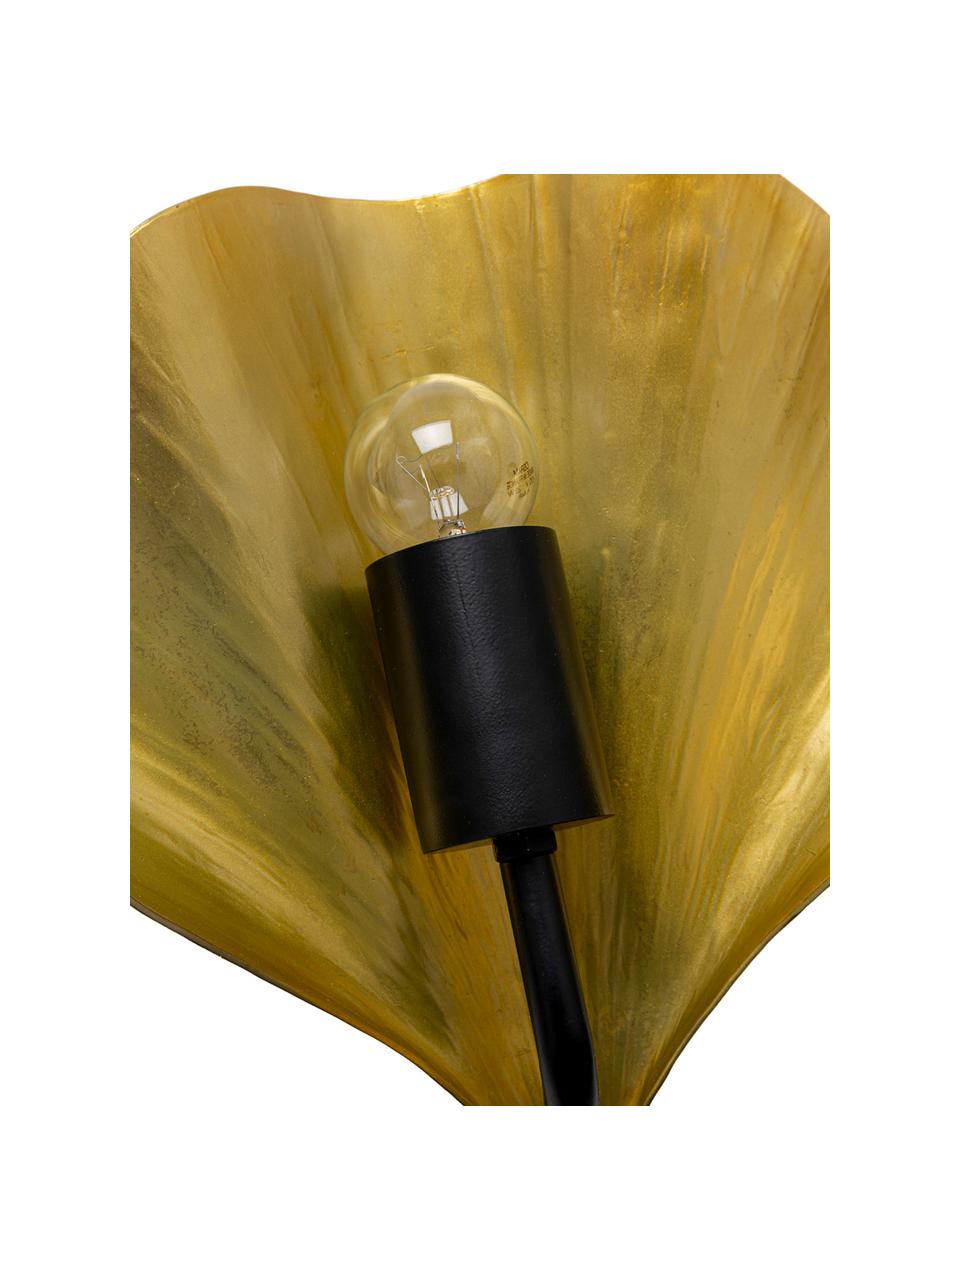 Wandleuchte Ginkgo mit Marmorbefestigung, Lampenschirm: Aluminium, lackiert, Gold, Schwarz, 30 x 33 cm